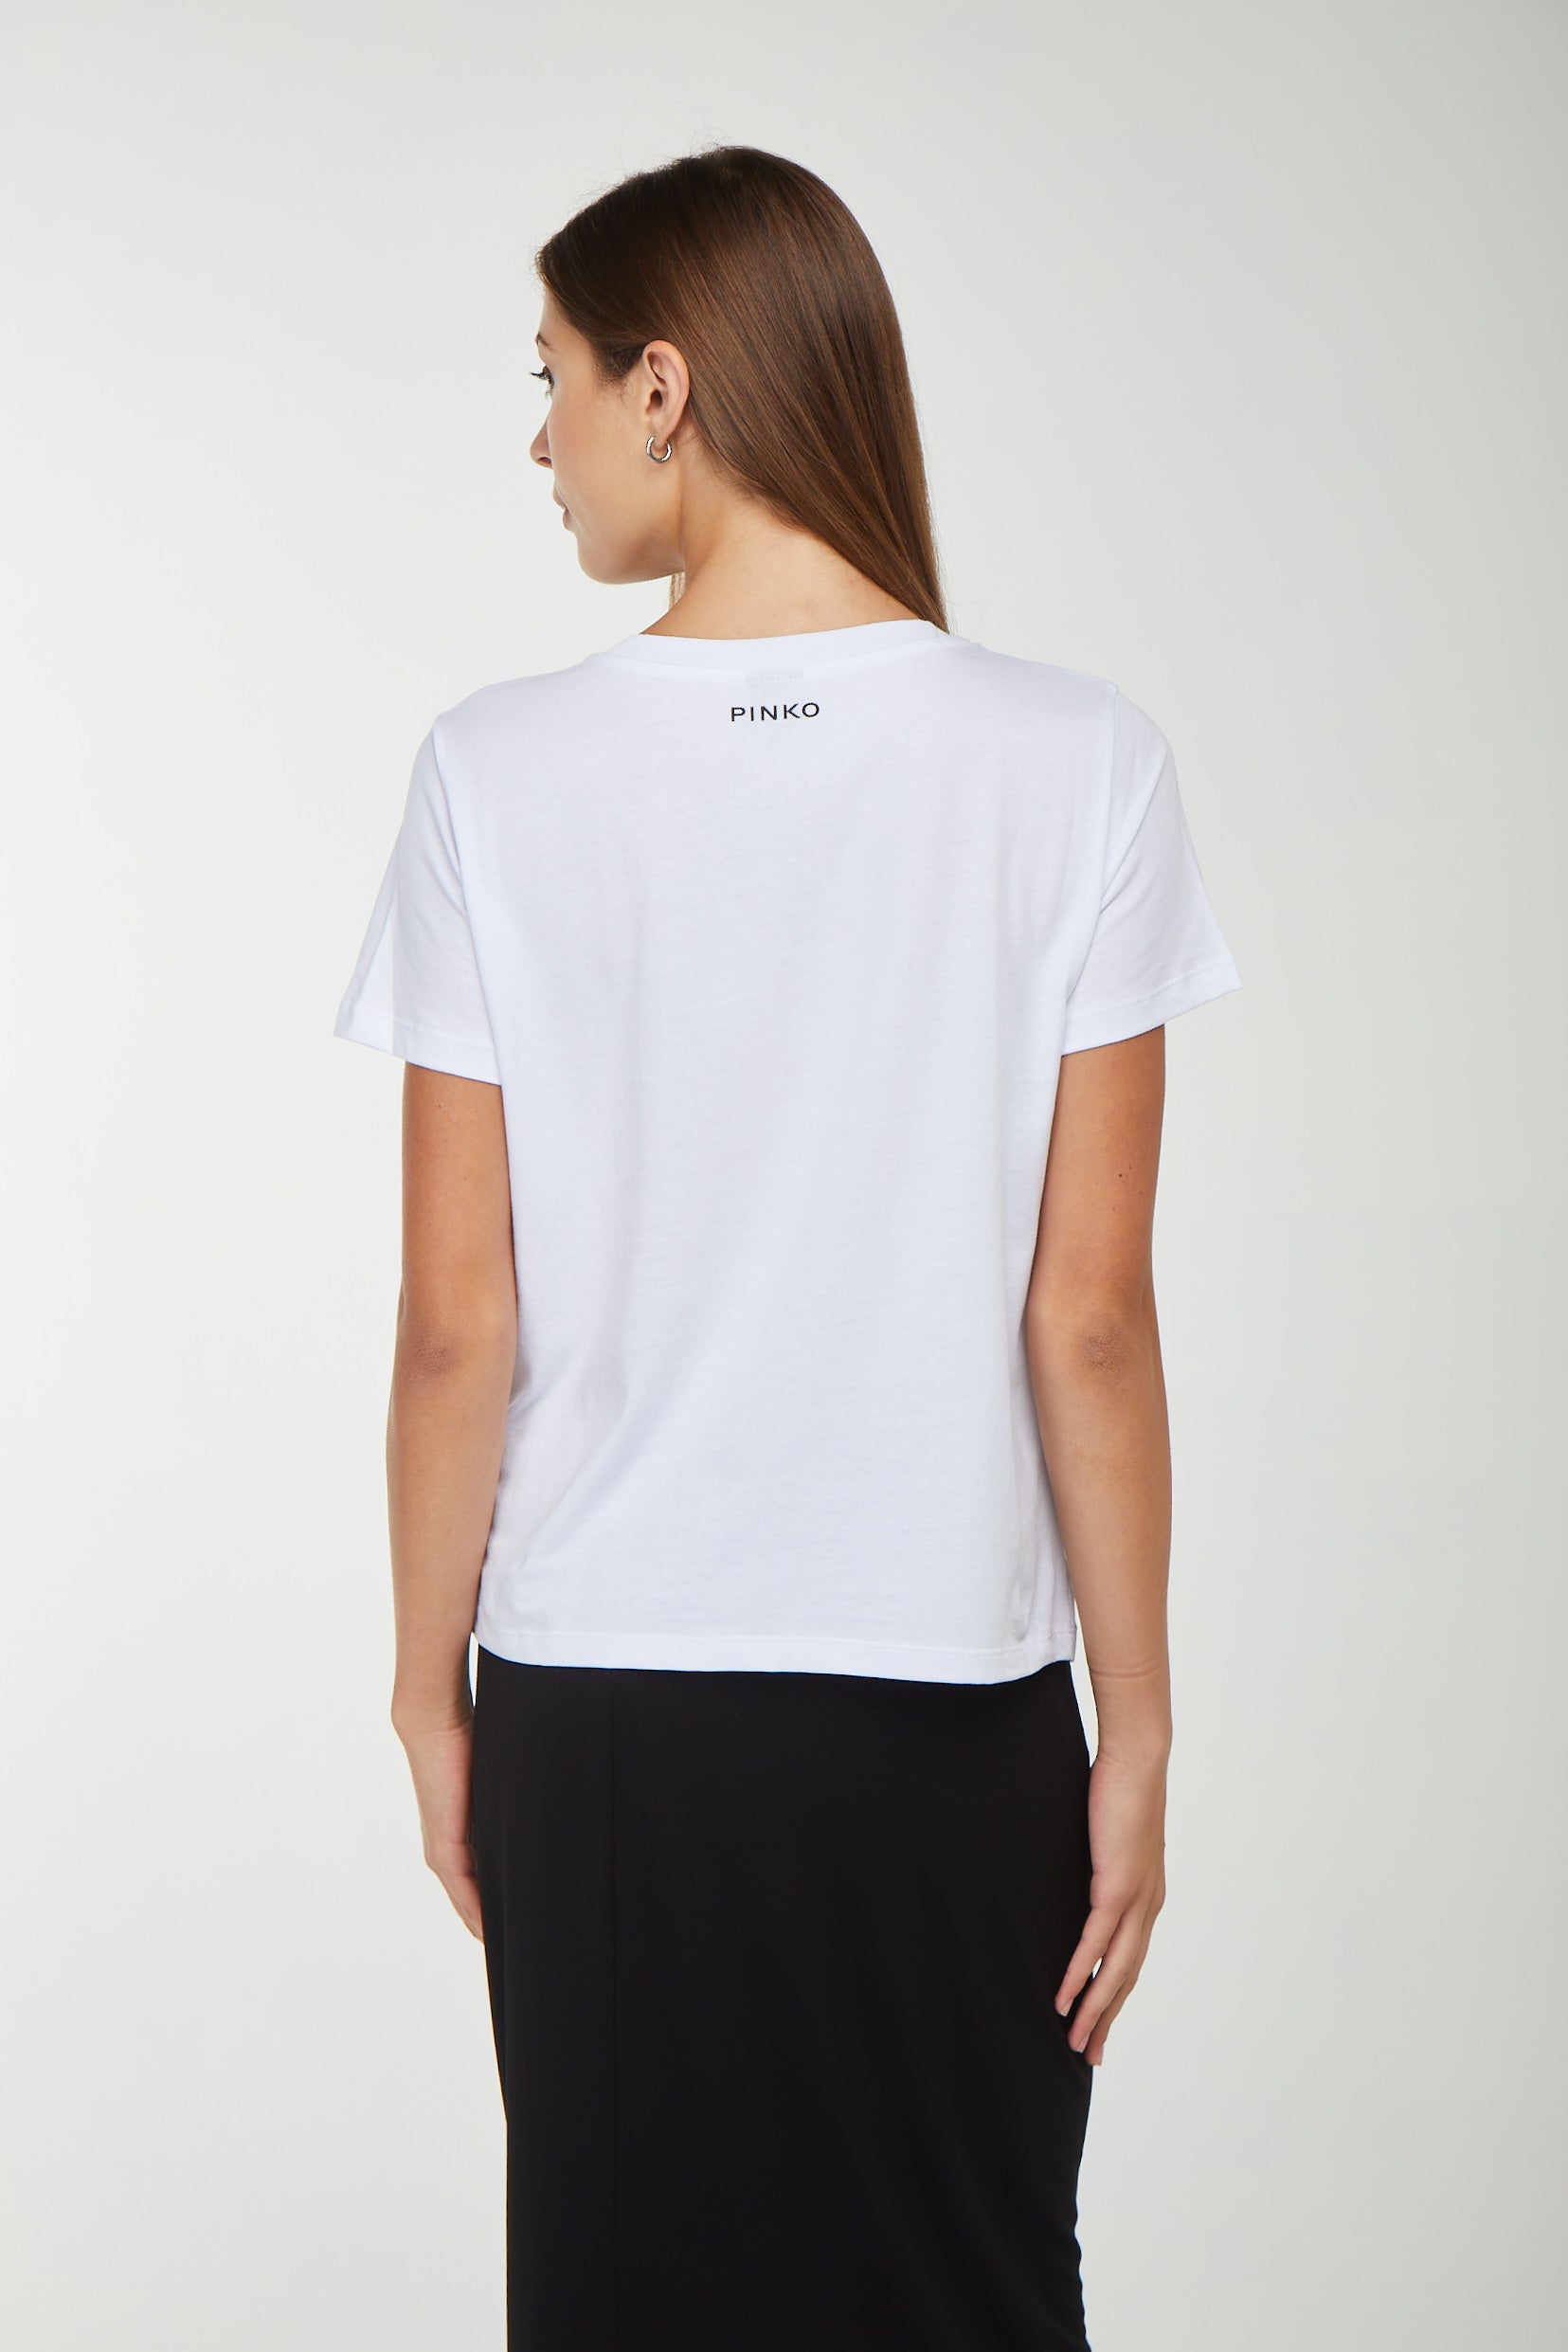 PINKO White T-shirt with Print